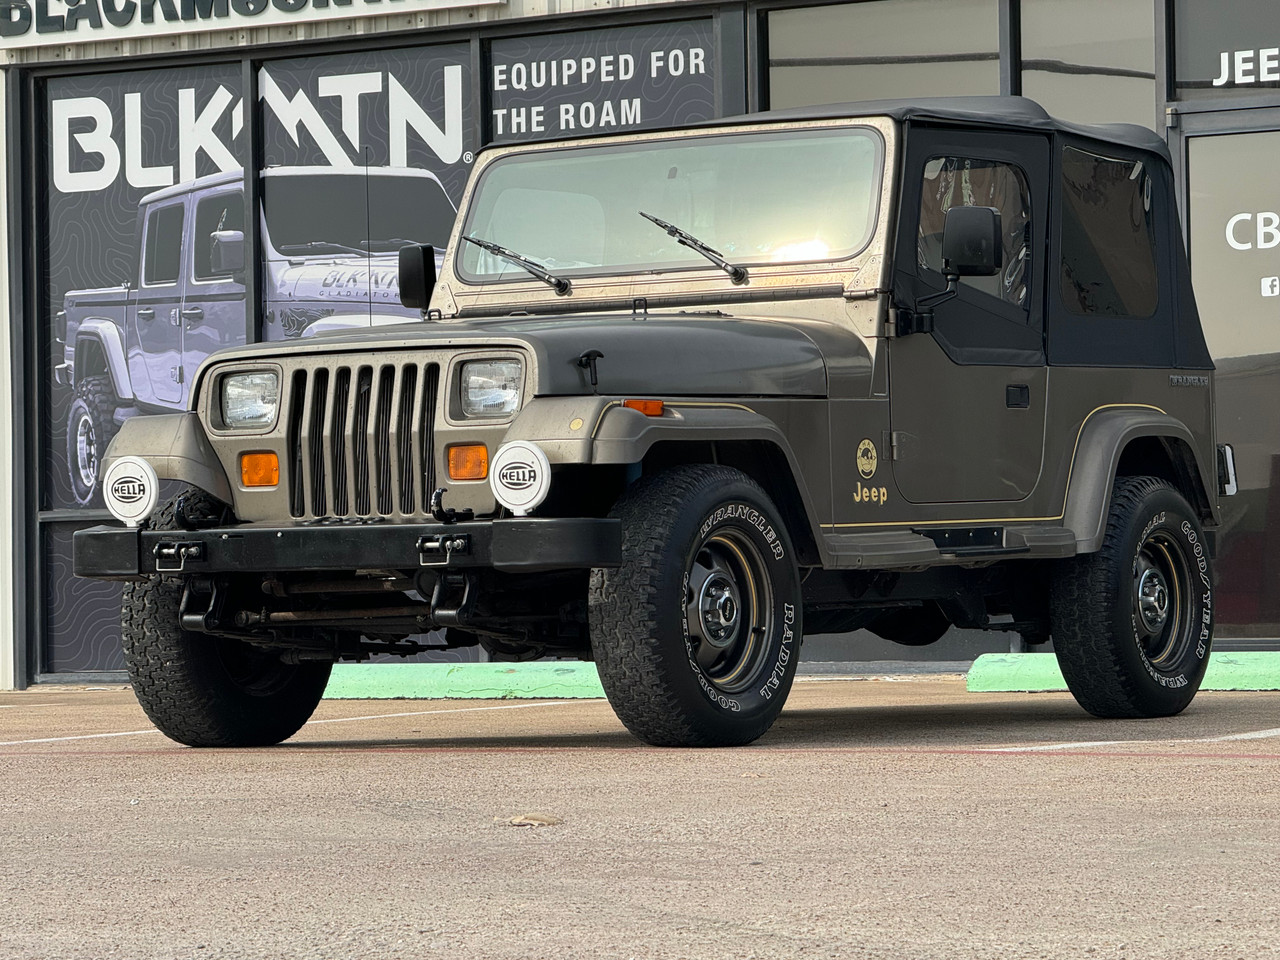 1989 Jeep Wrangler YJ Sahara - Stock  # 167244